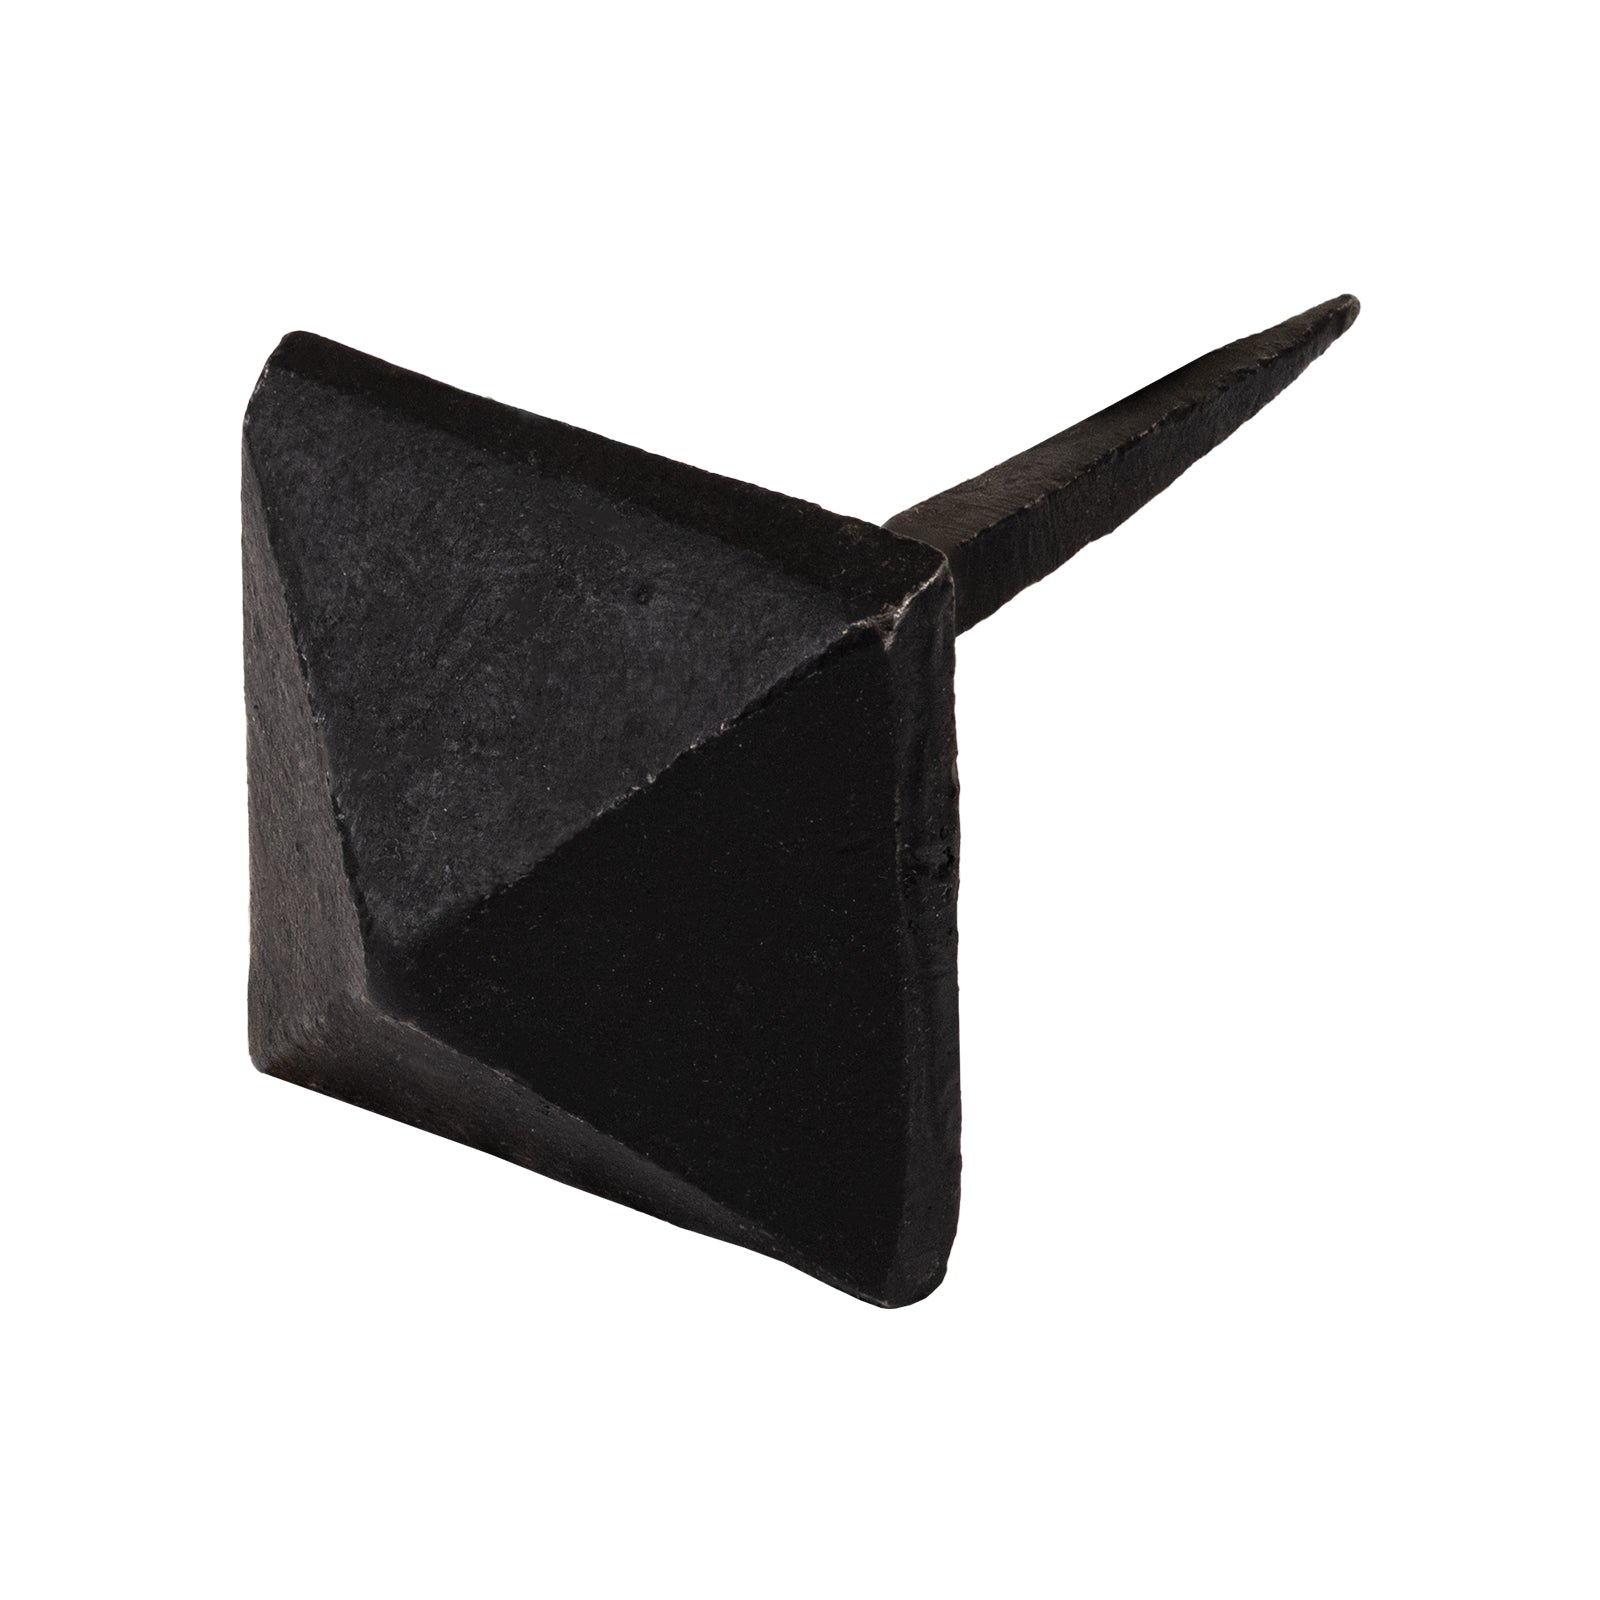 22mm black pyramid door stud